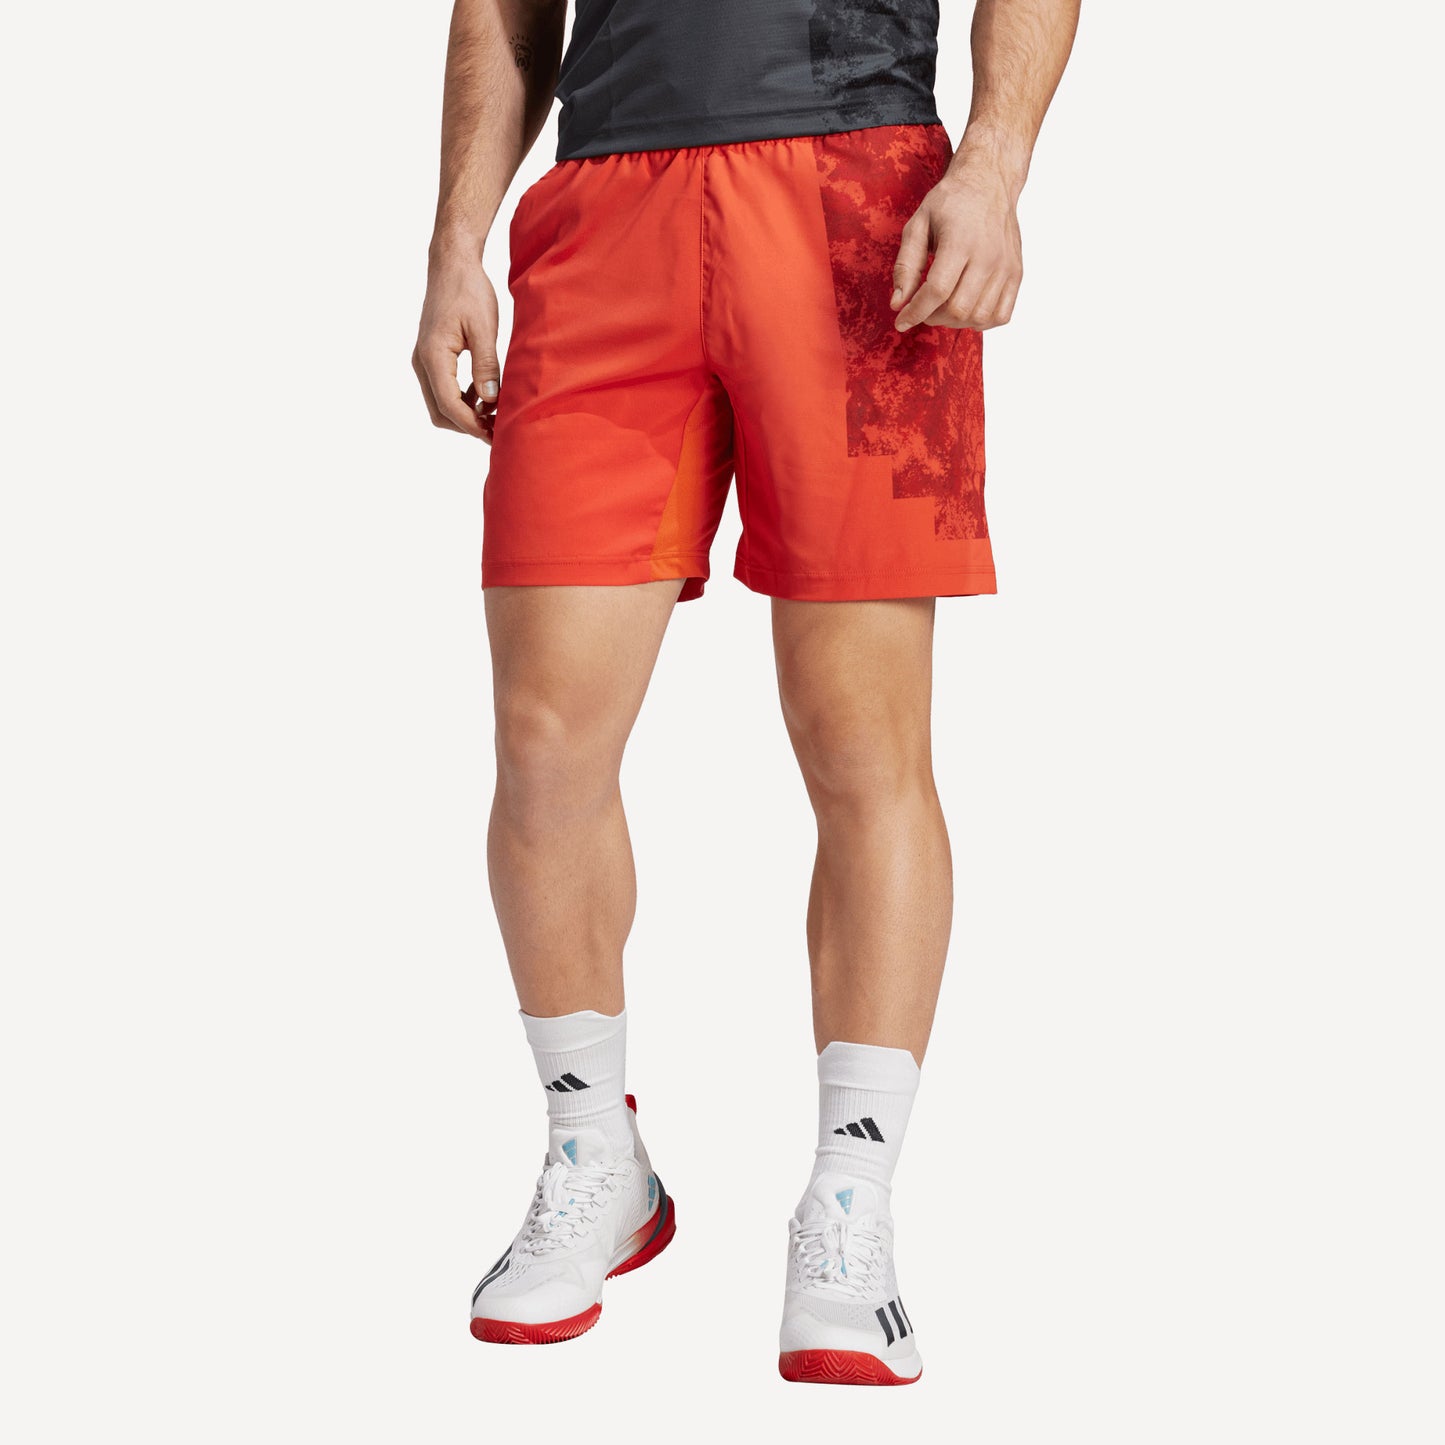 adidas Paris Ergo Men's 7-Inch Tennis Shorts Red (1)